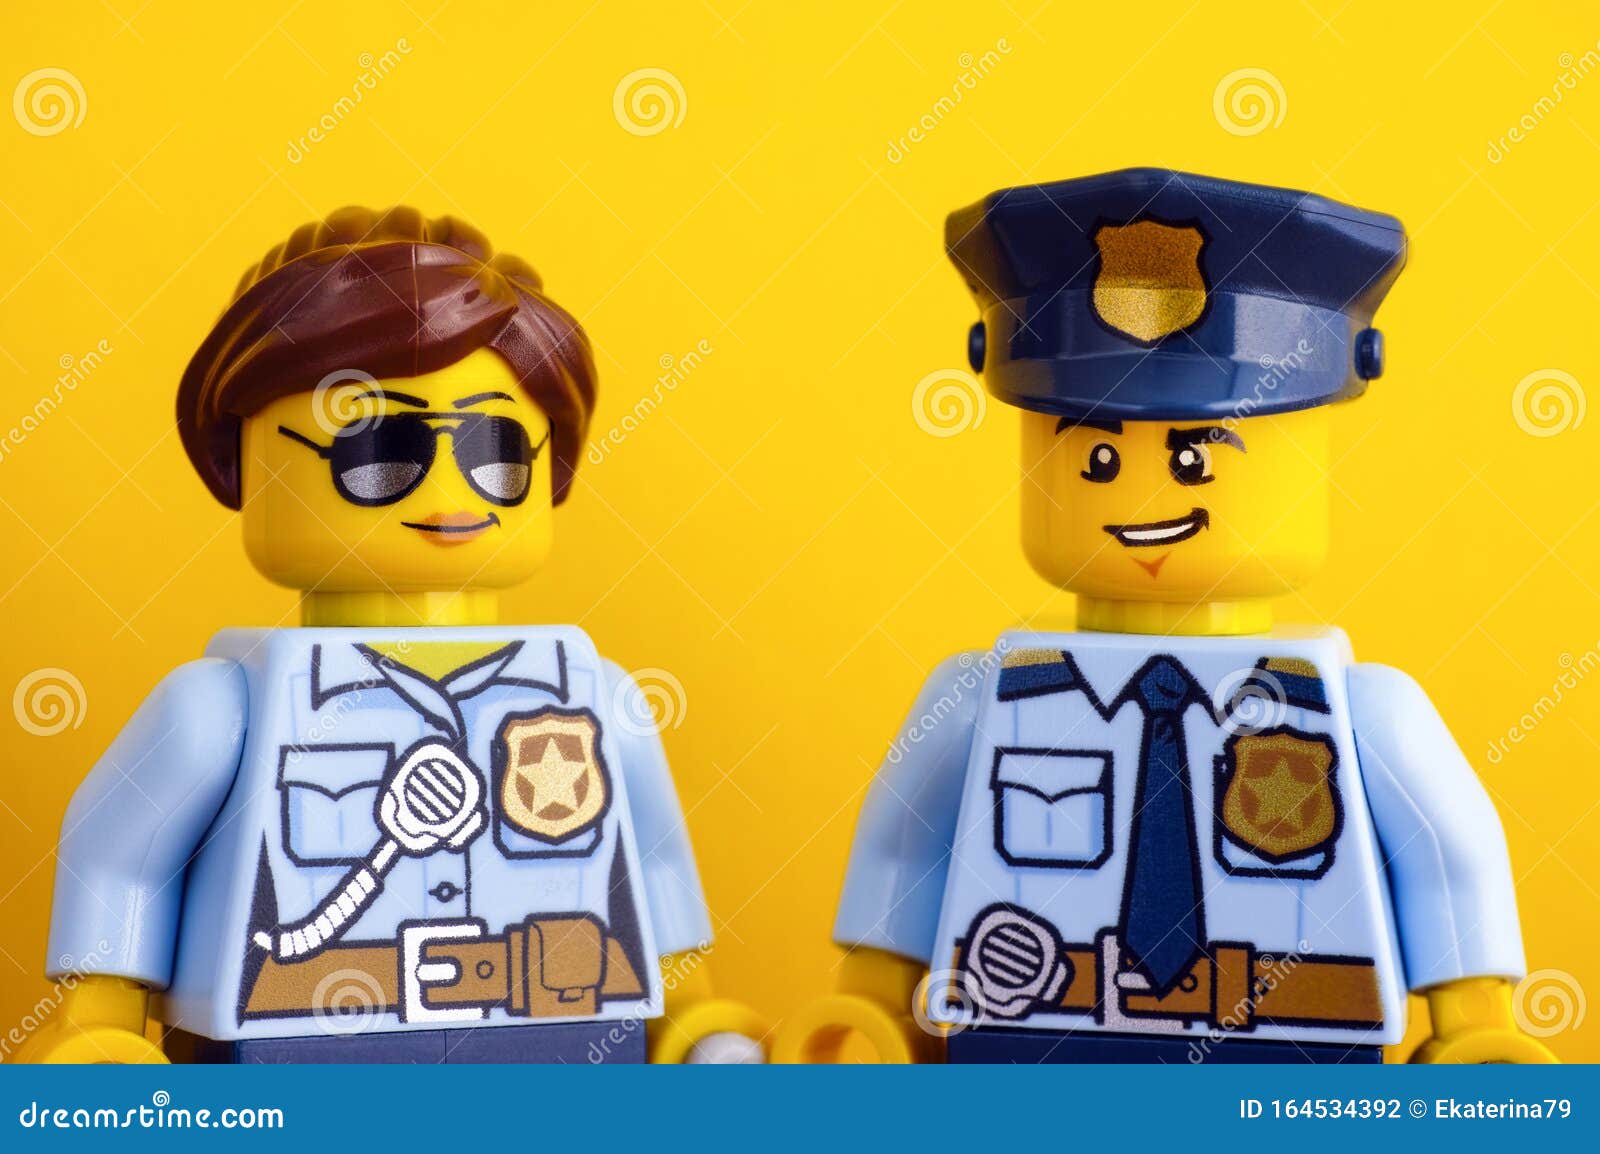 Lego City girl female figurine figure blonde police femme officier 